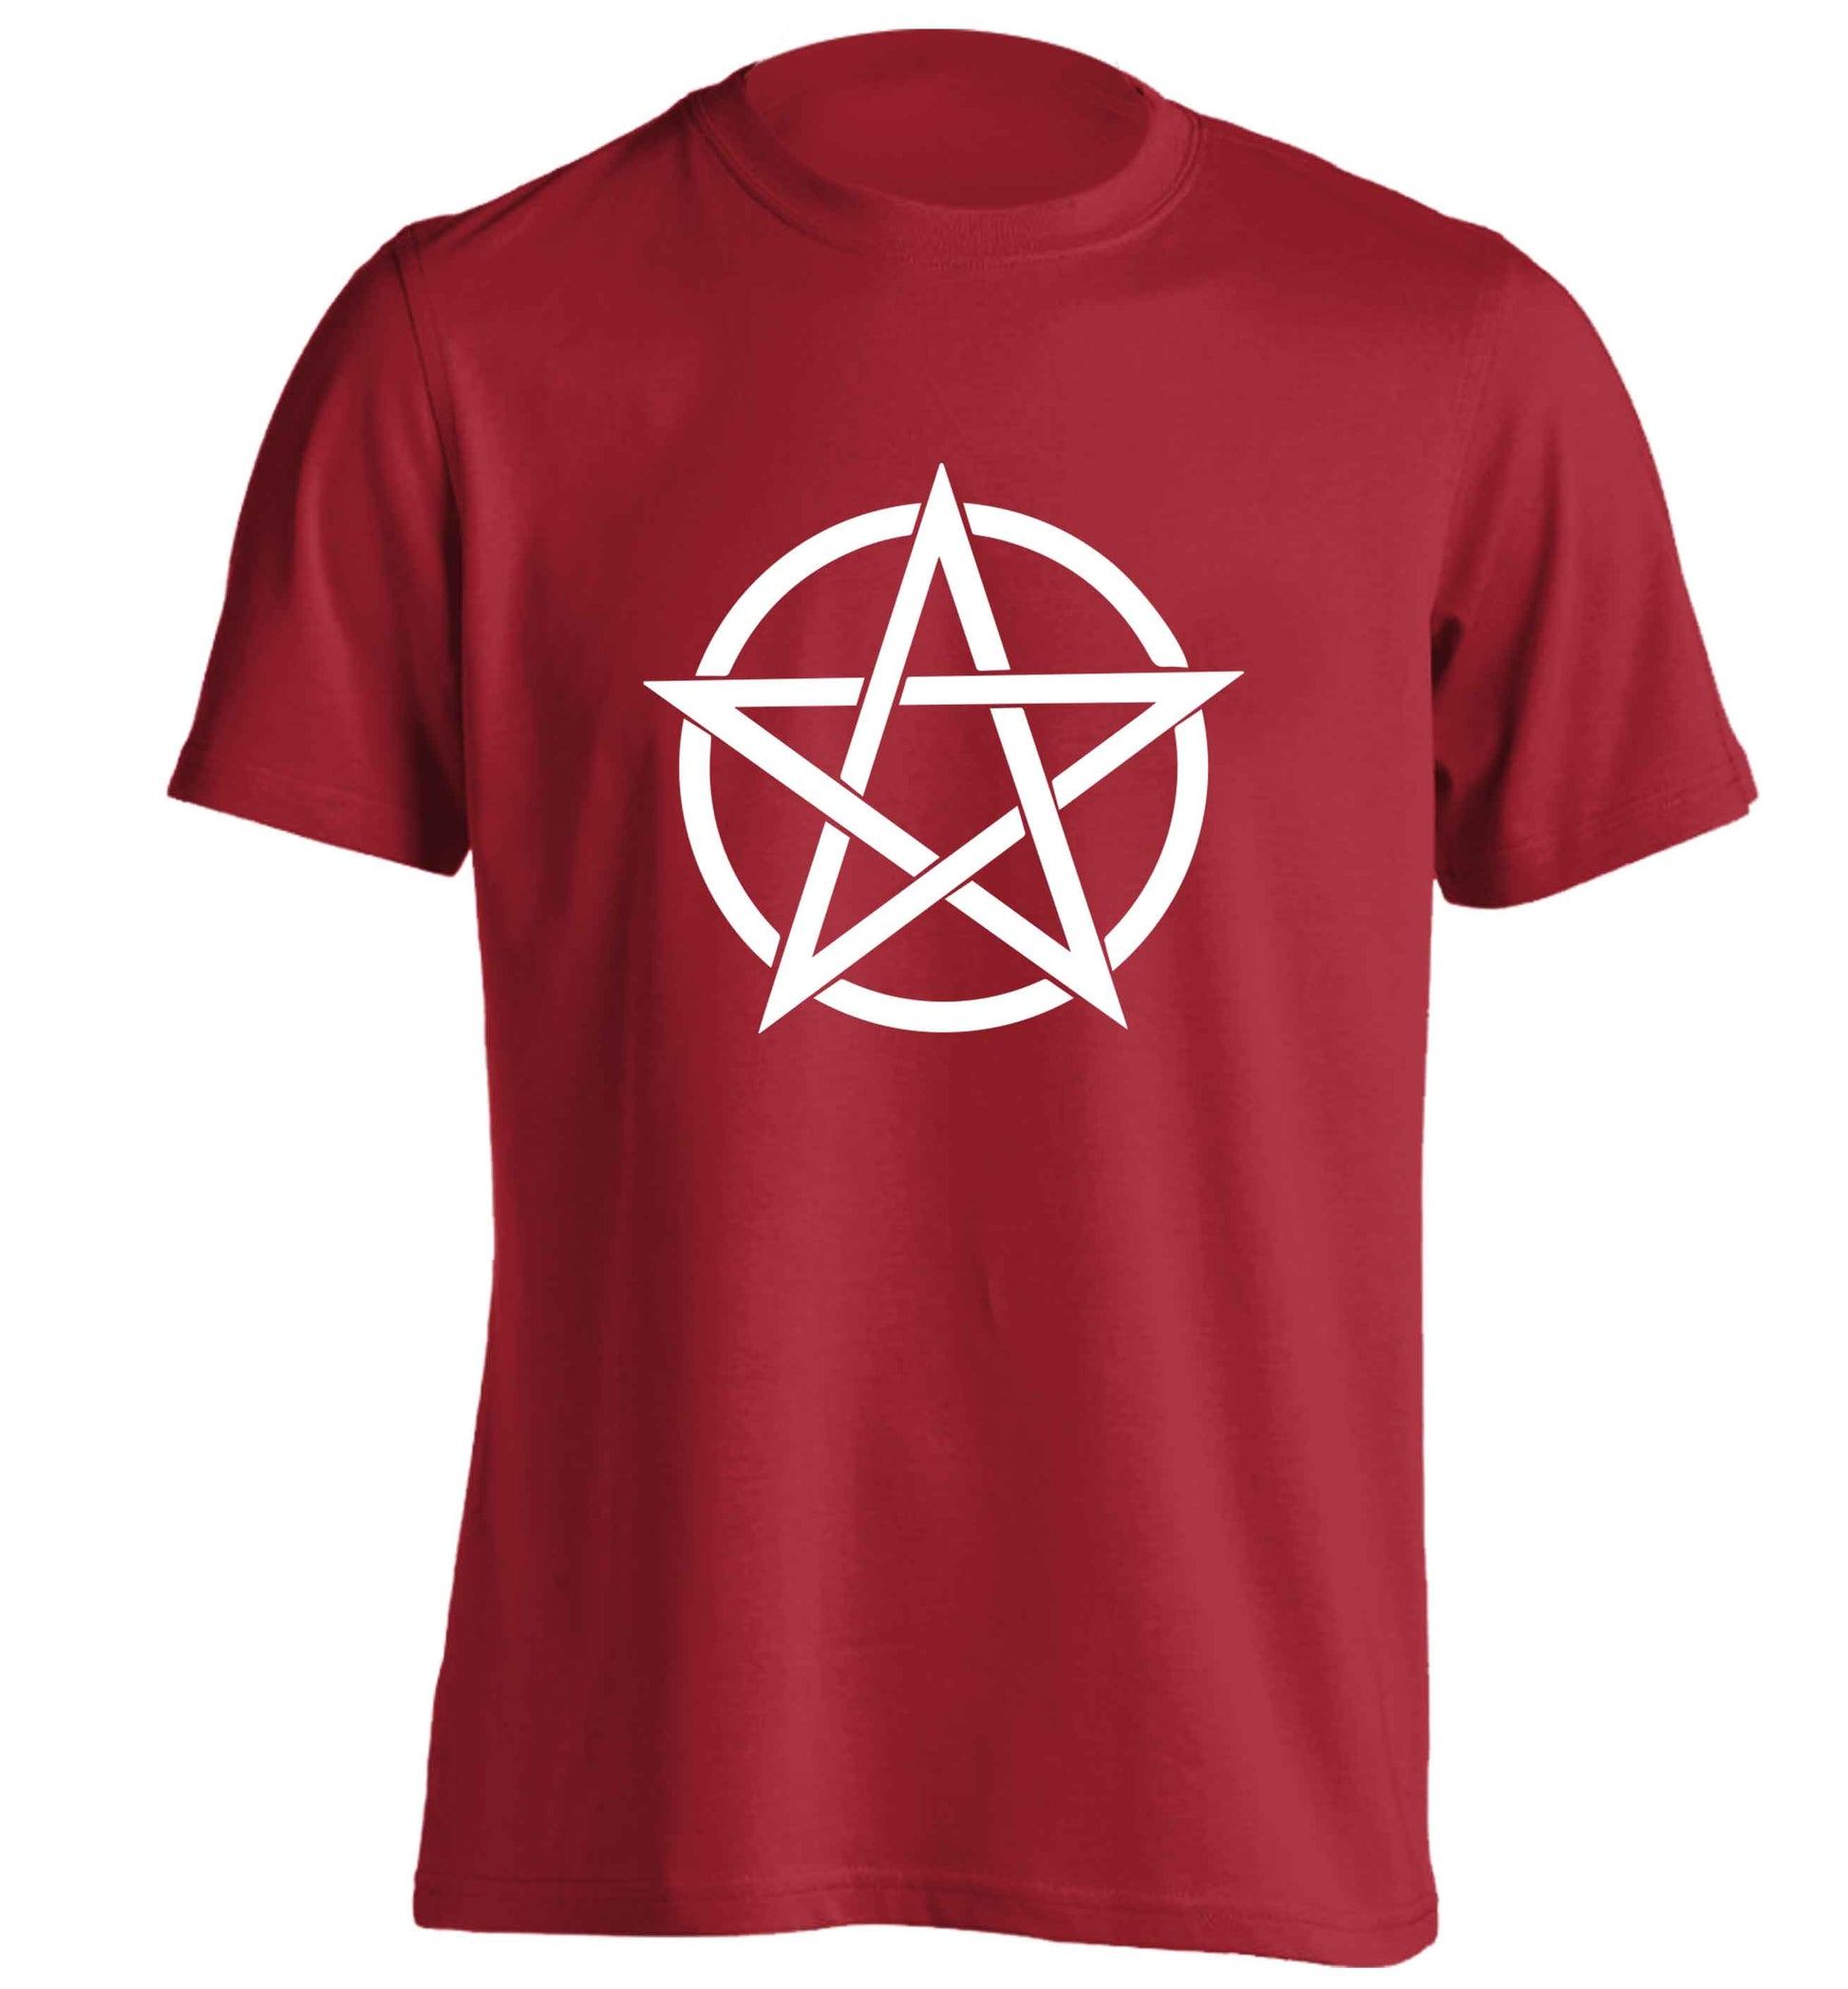 Pentagram symbol adults unisex red Tshirt 2XL